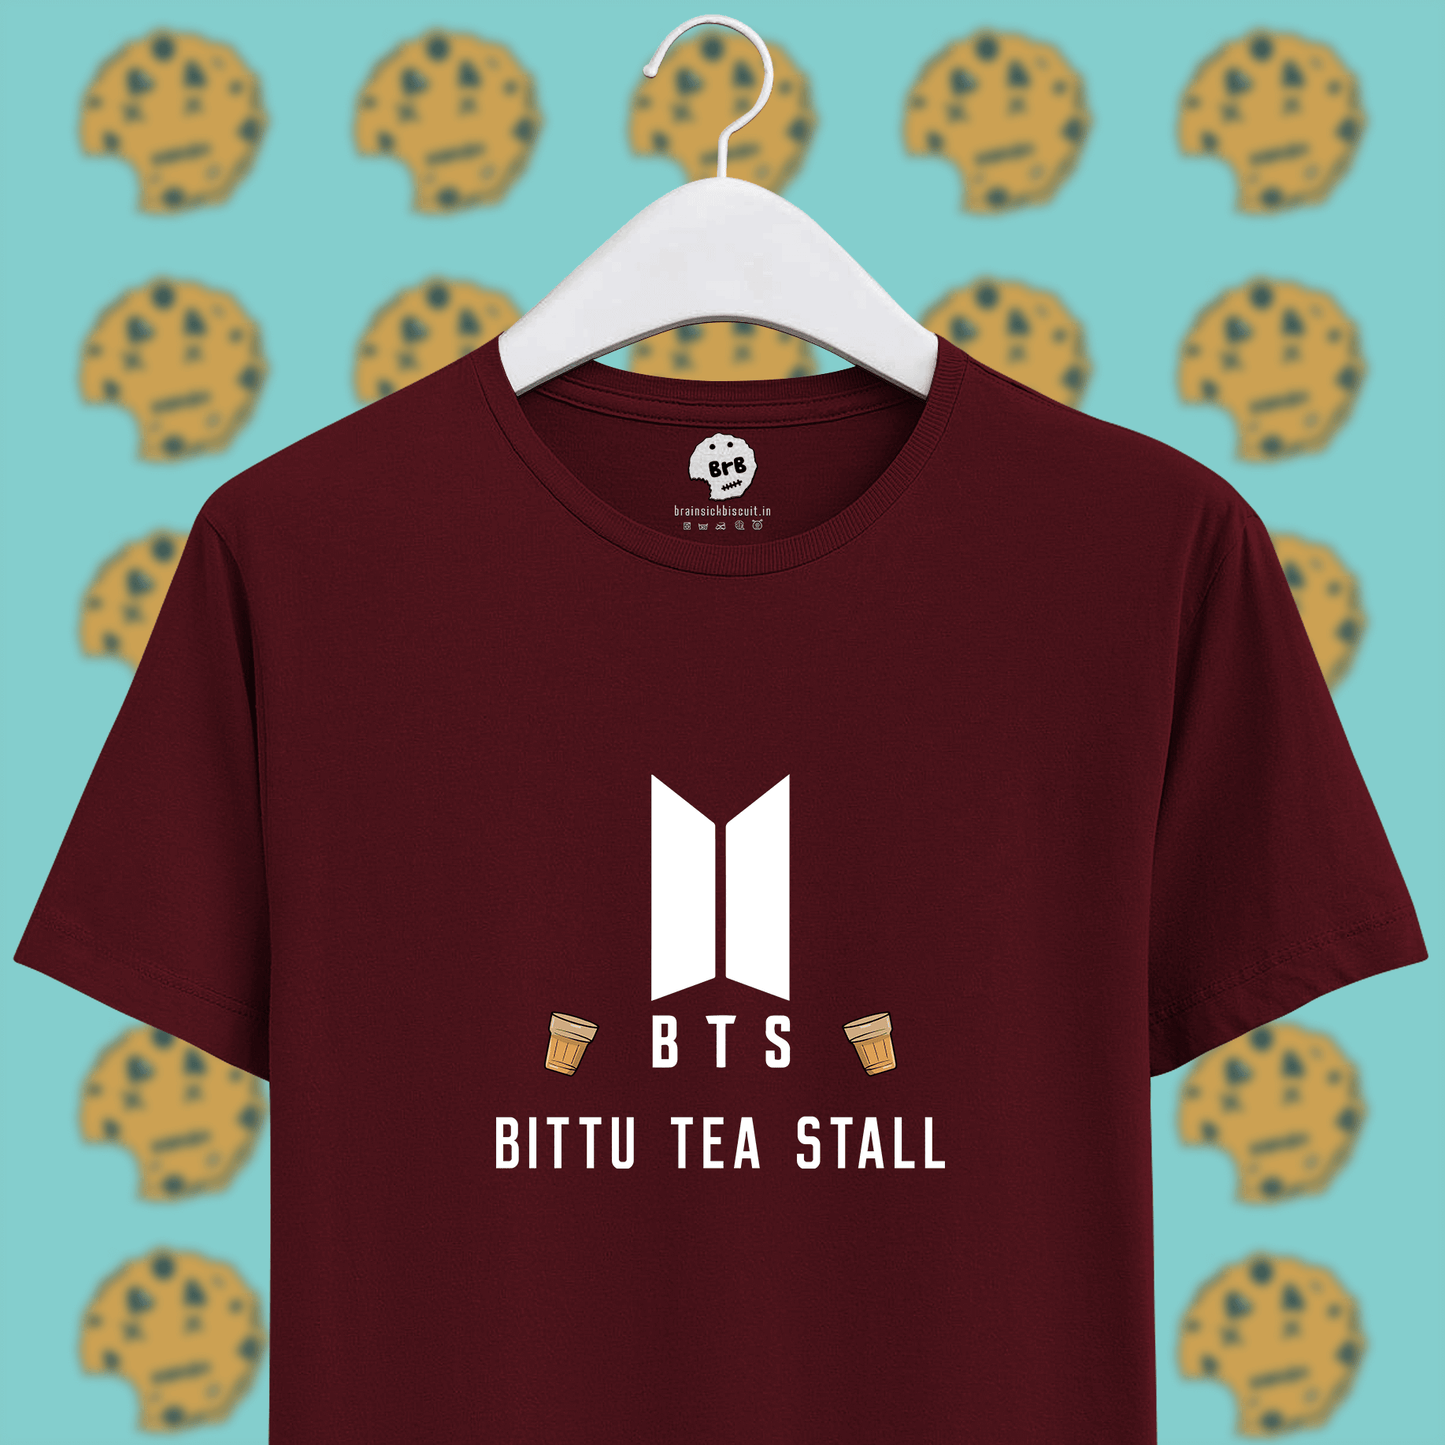 BTS logo with bittu tea stall joke on unisex maroon half sleeves cotton t-shirt.